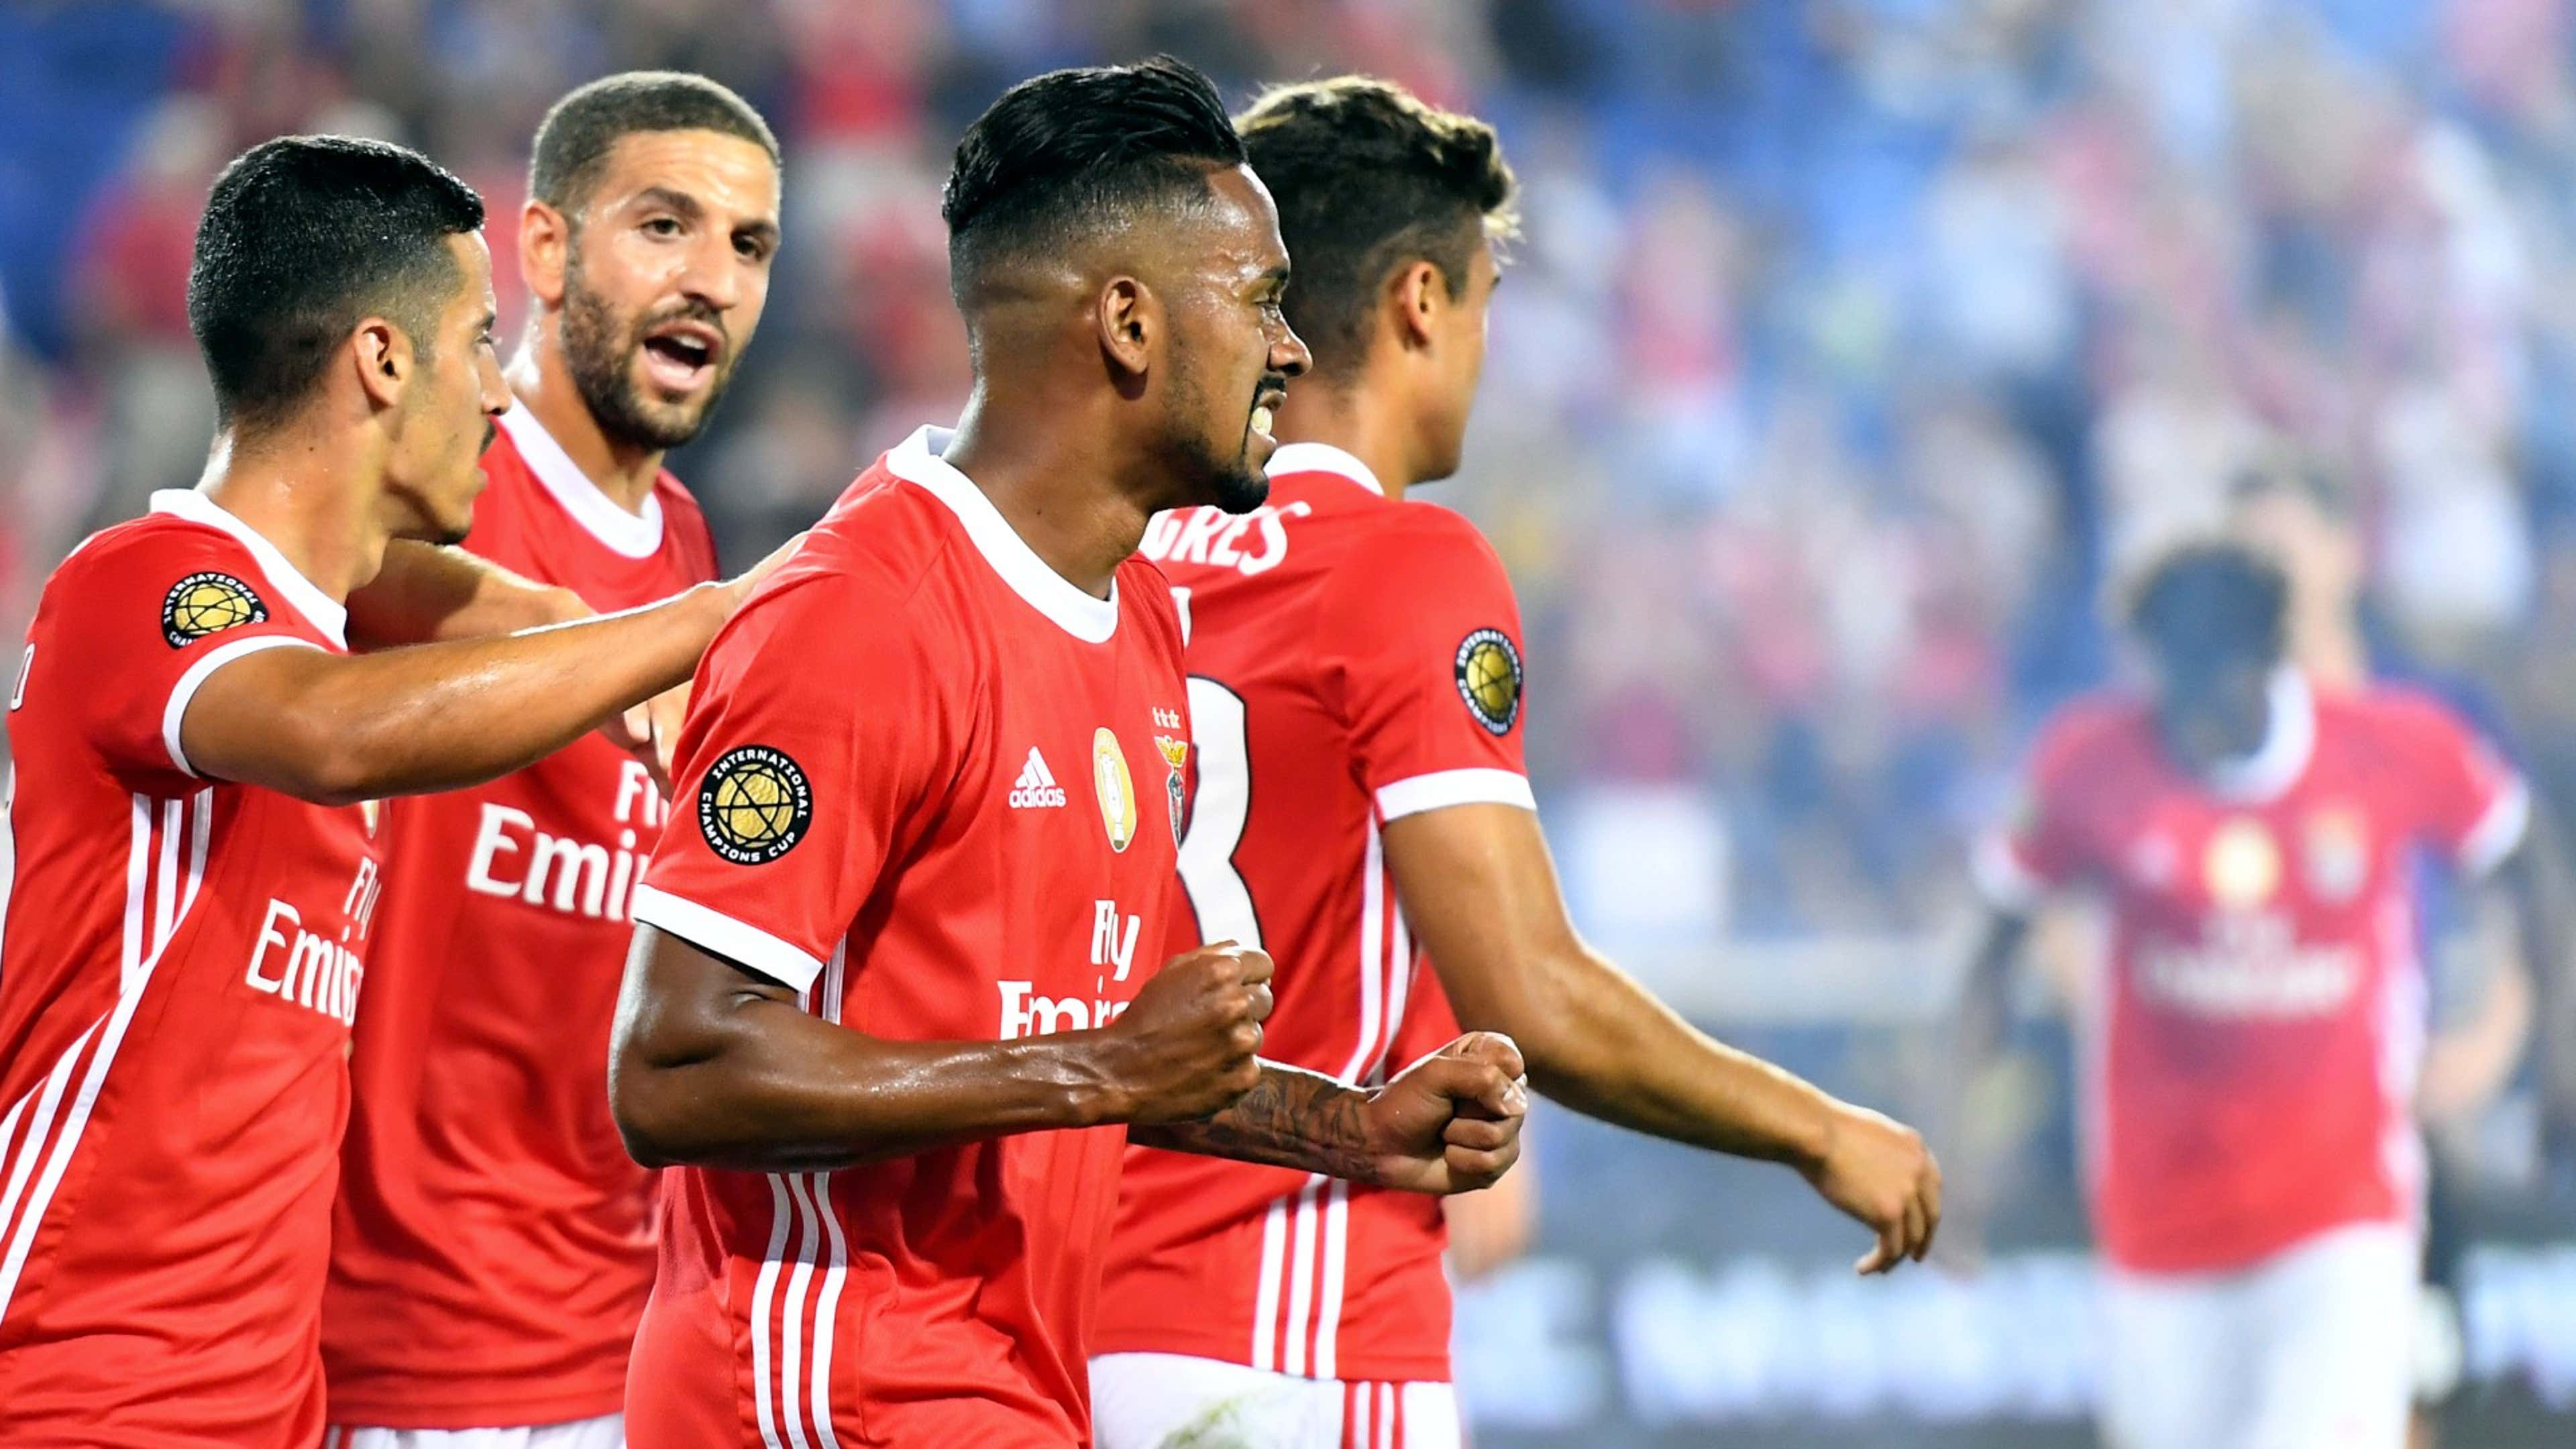 Benfica celebrating - ICC 2019